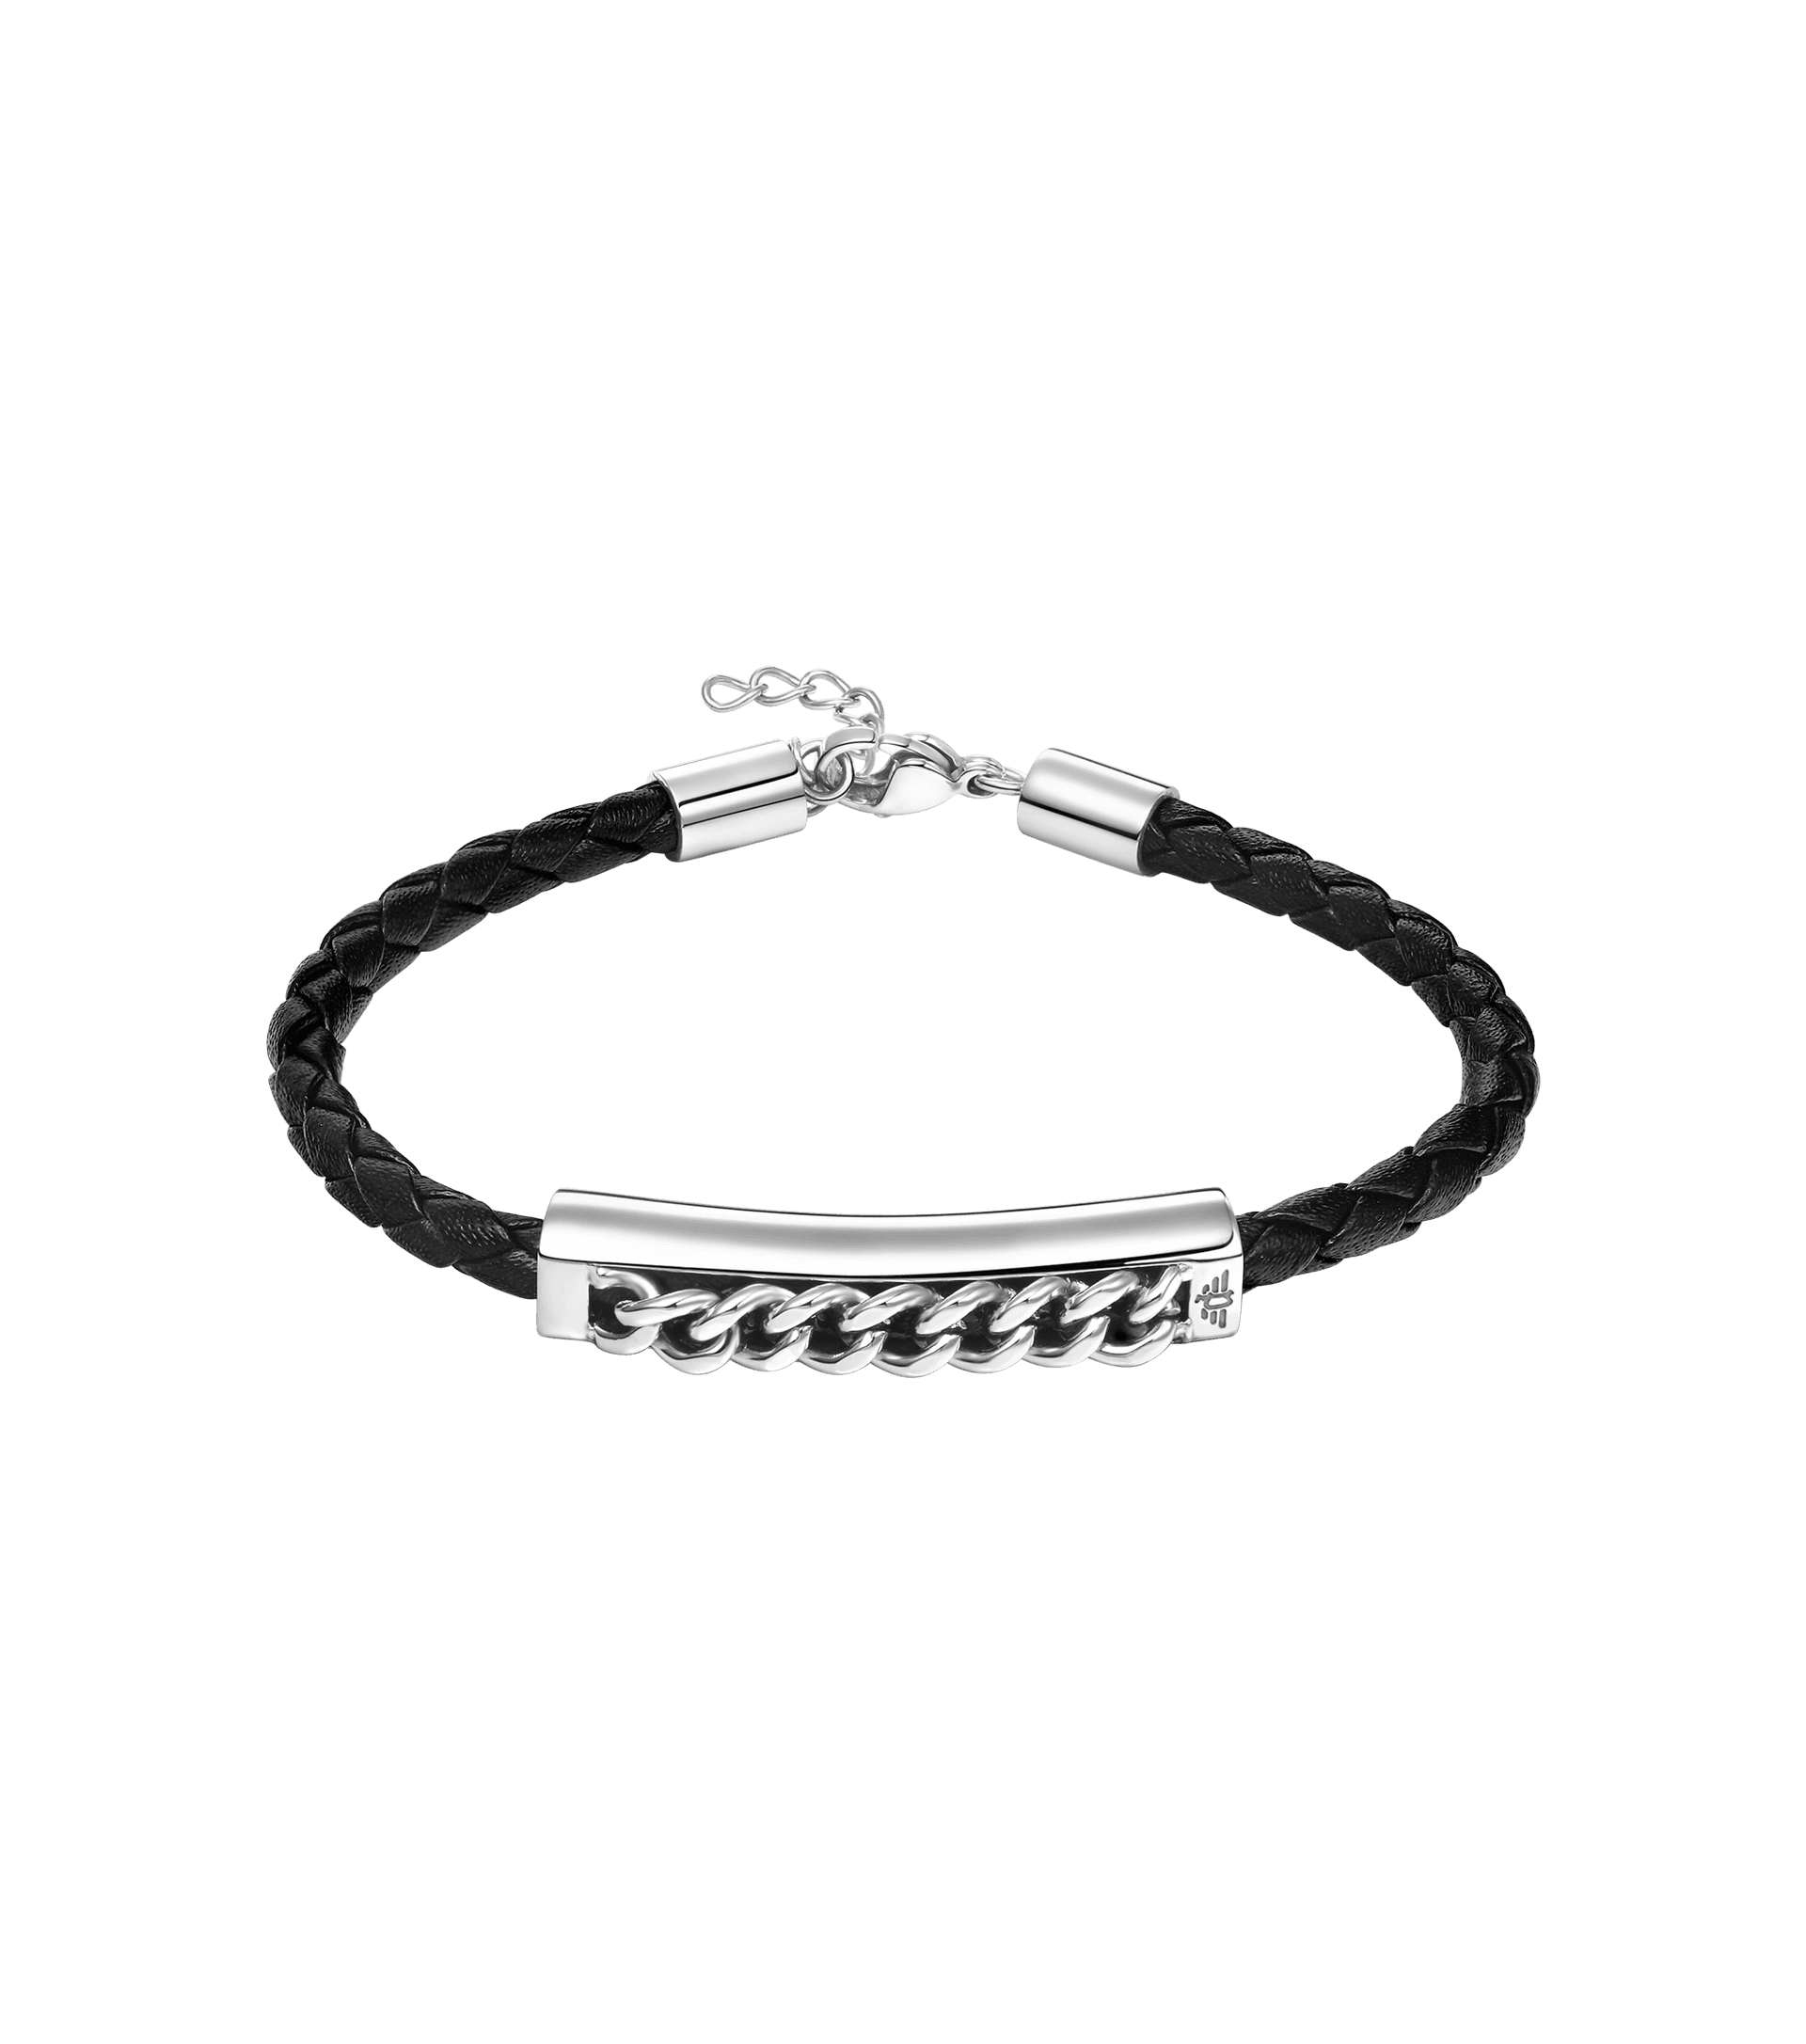 Police Bracelet For Mix Men PEAGB0033101 jewels - Police